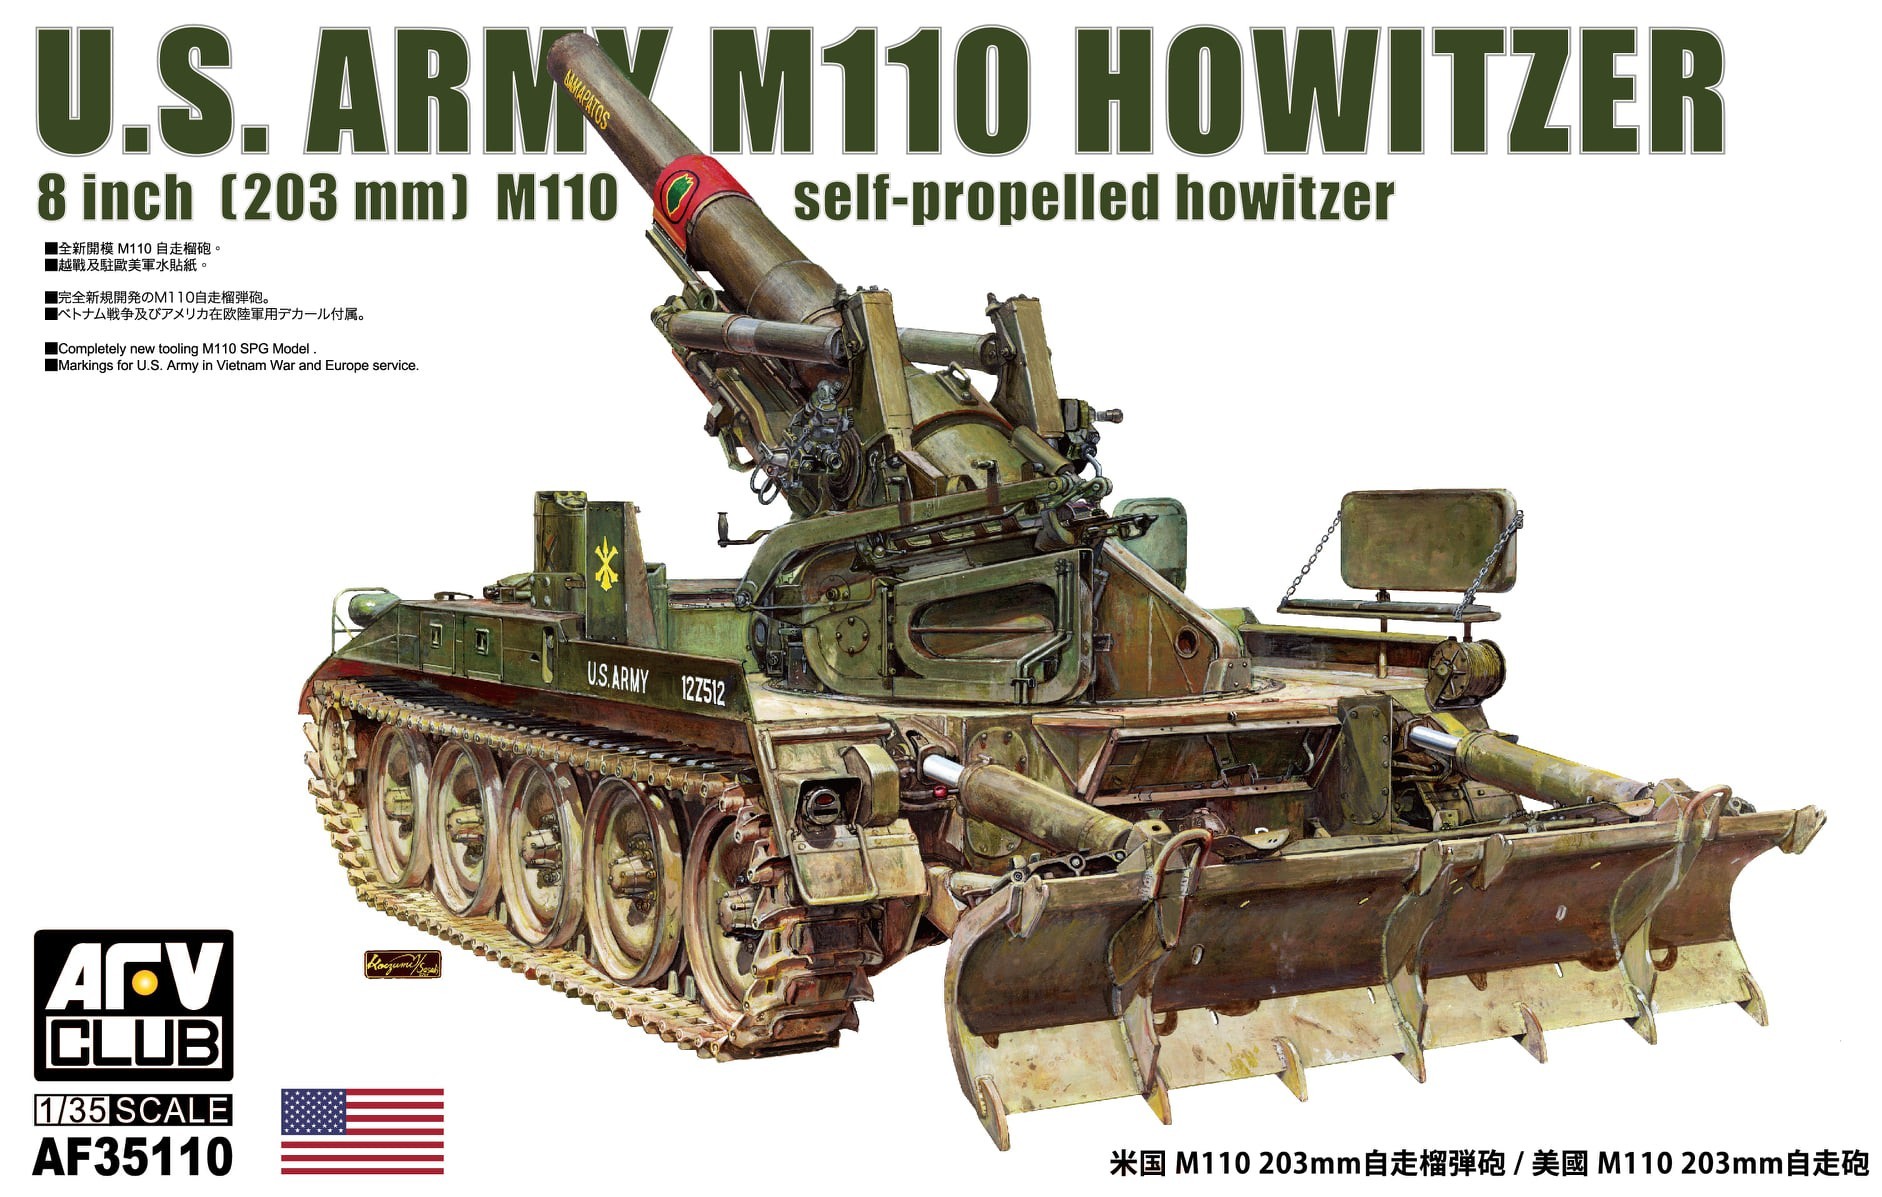 AF35110 - US Army M110 Howitzer